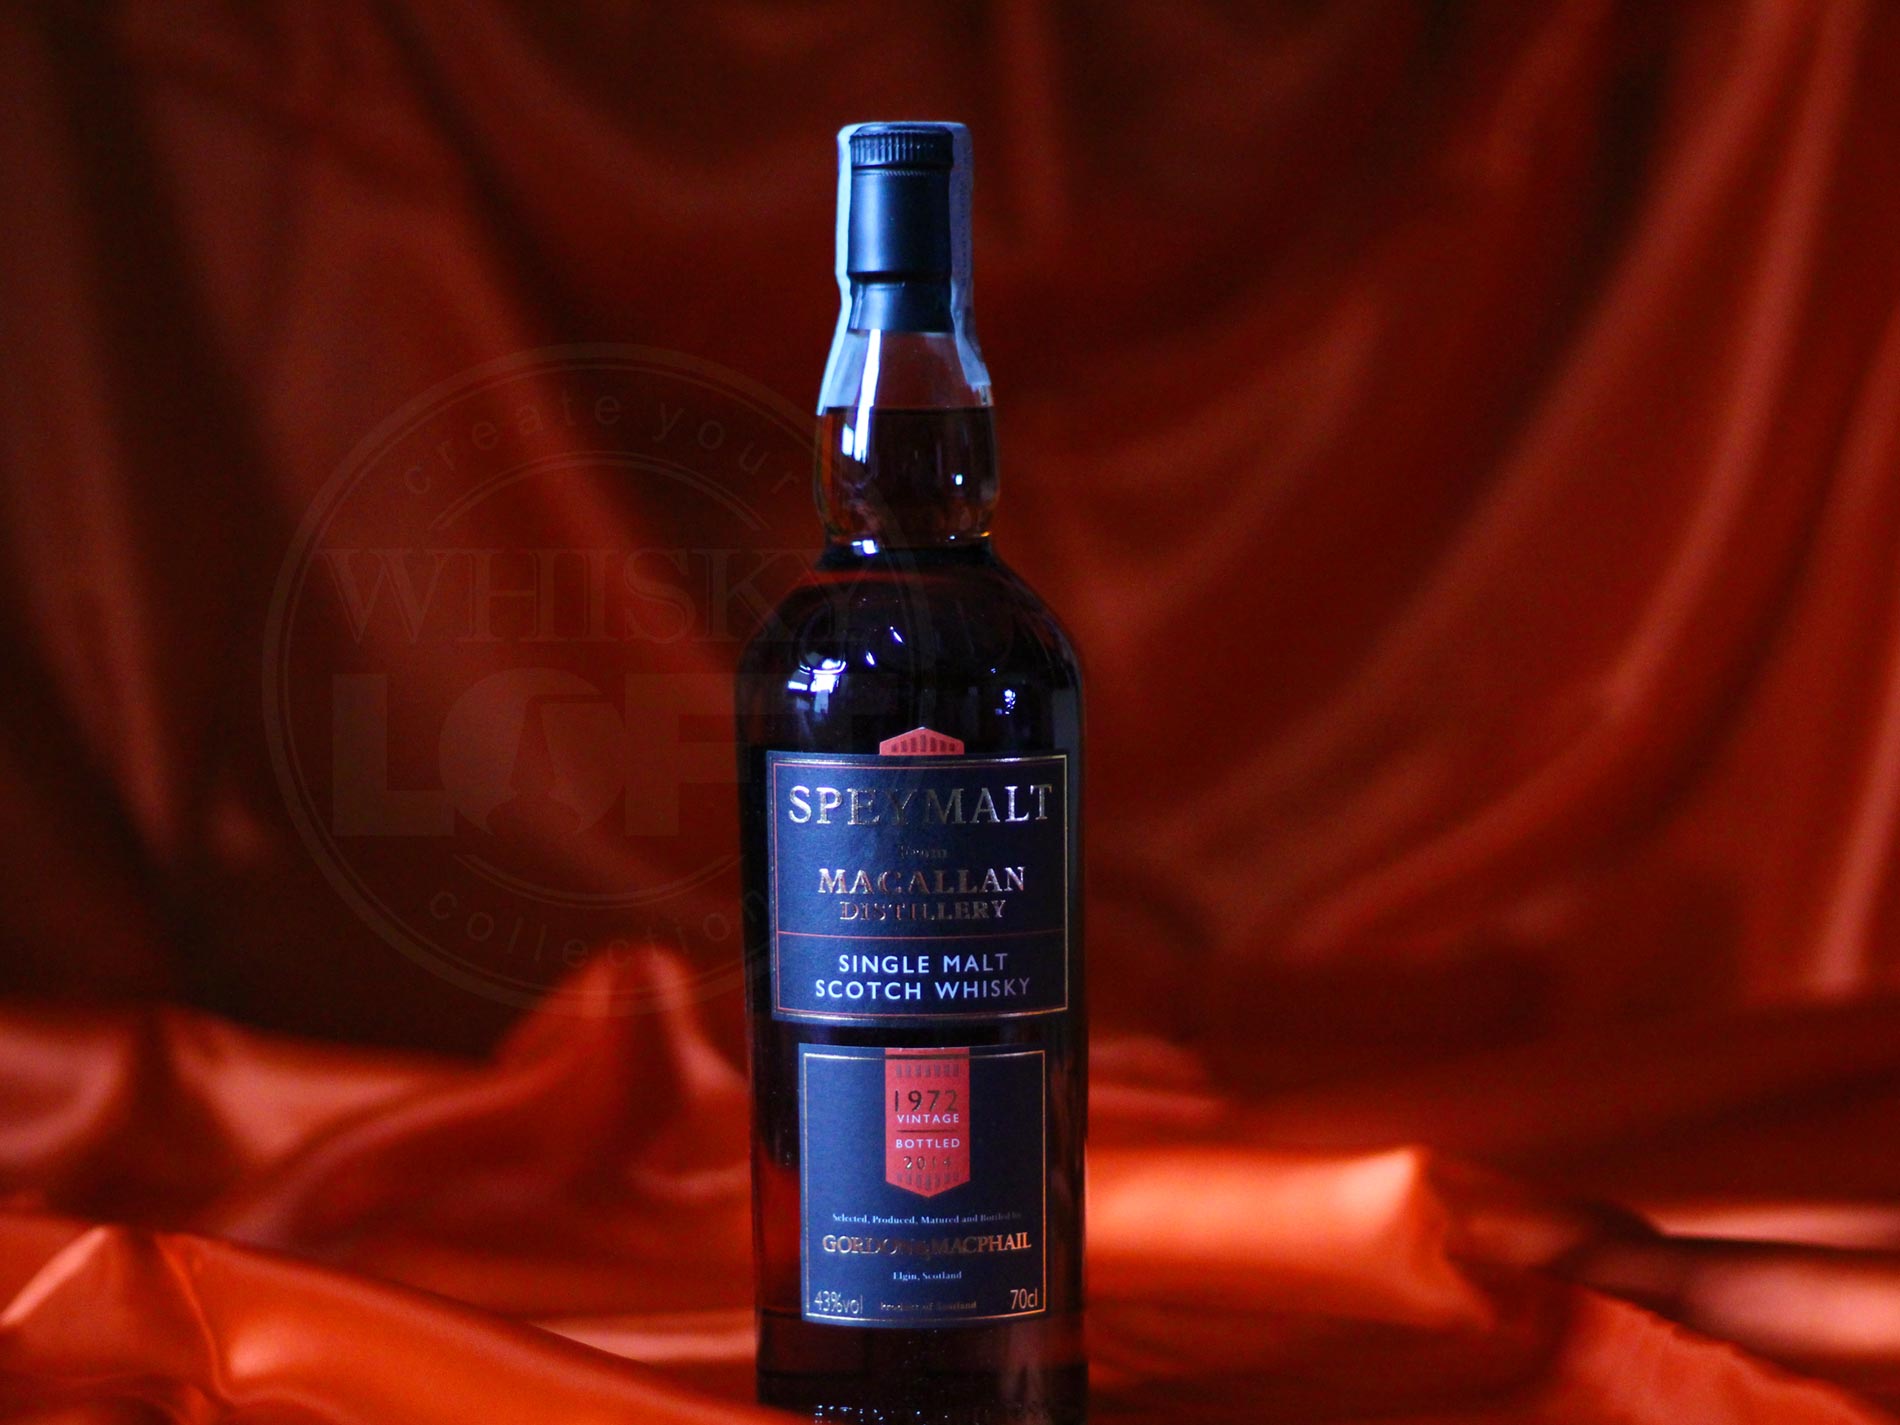 Macallan, Gordon & MacPhail (GM), Single Malt Scotch Whisky, 1972 distilled.